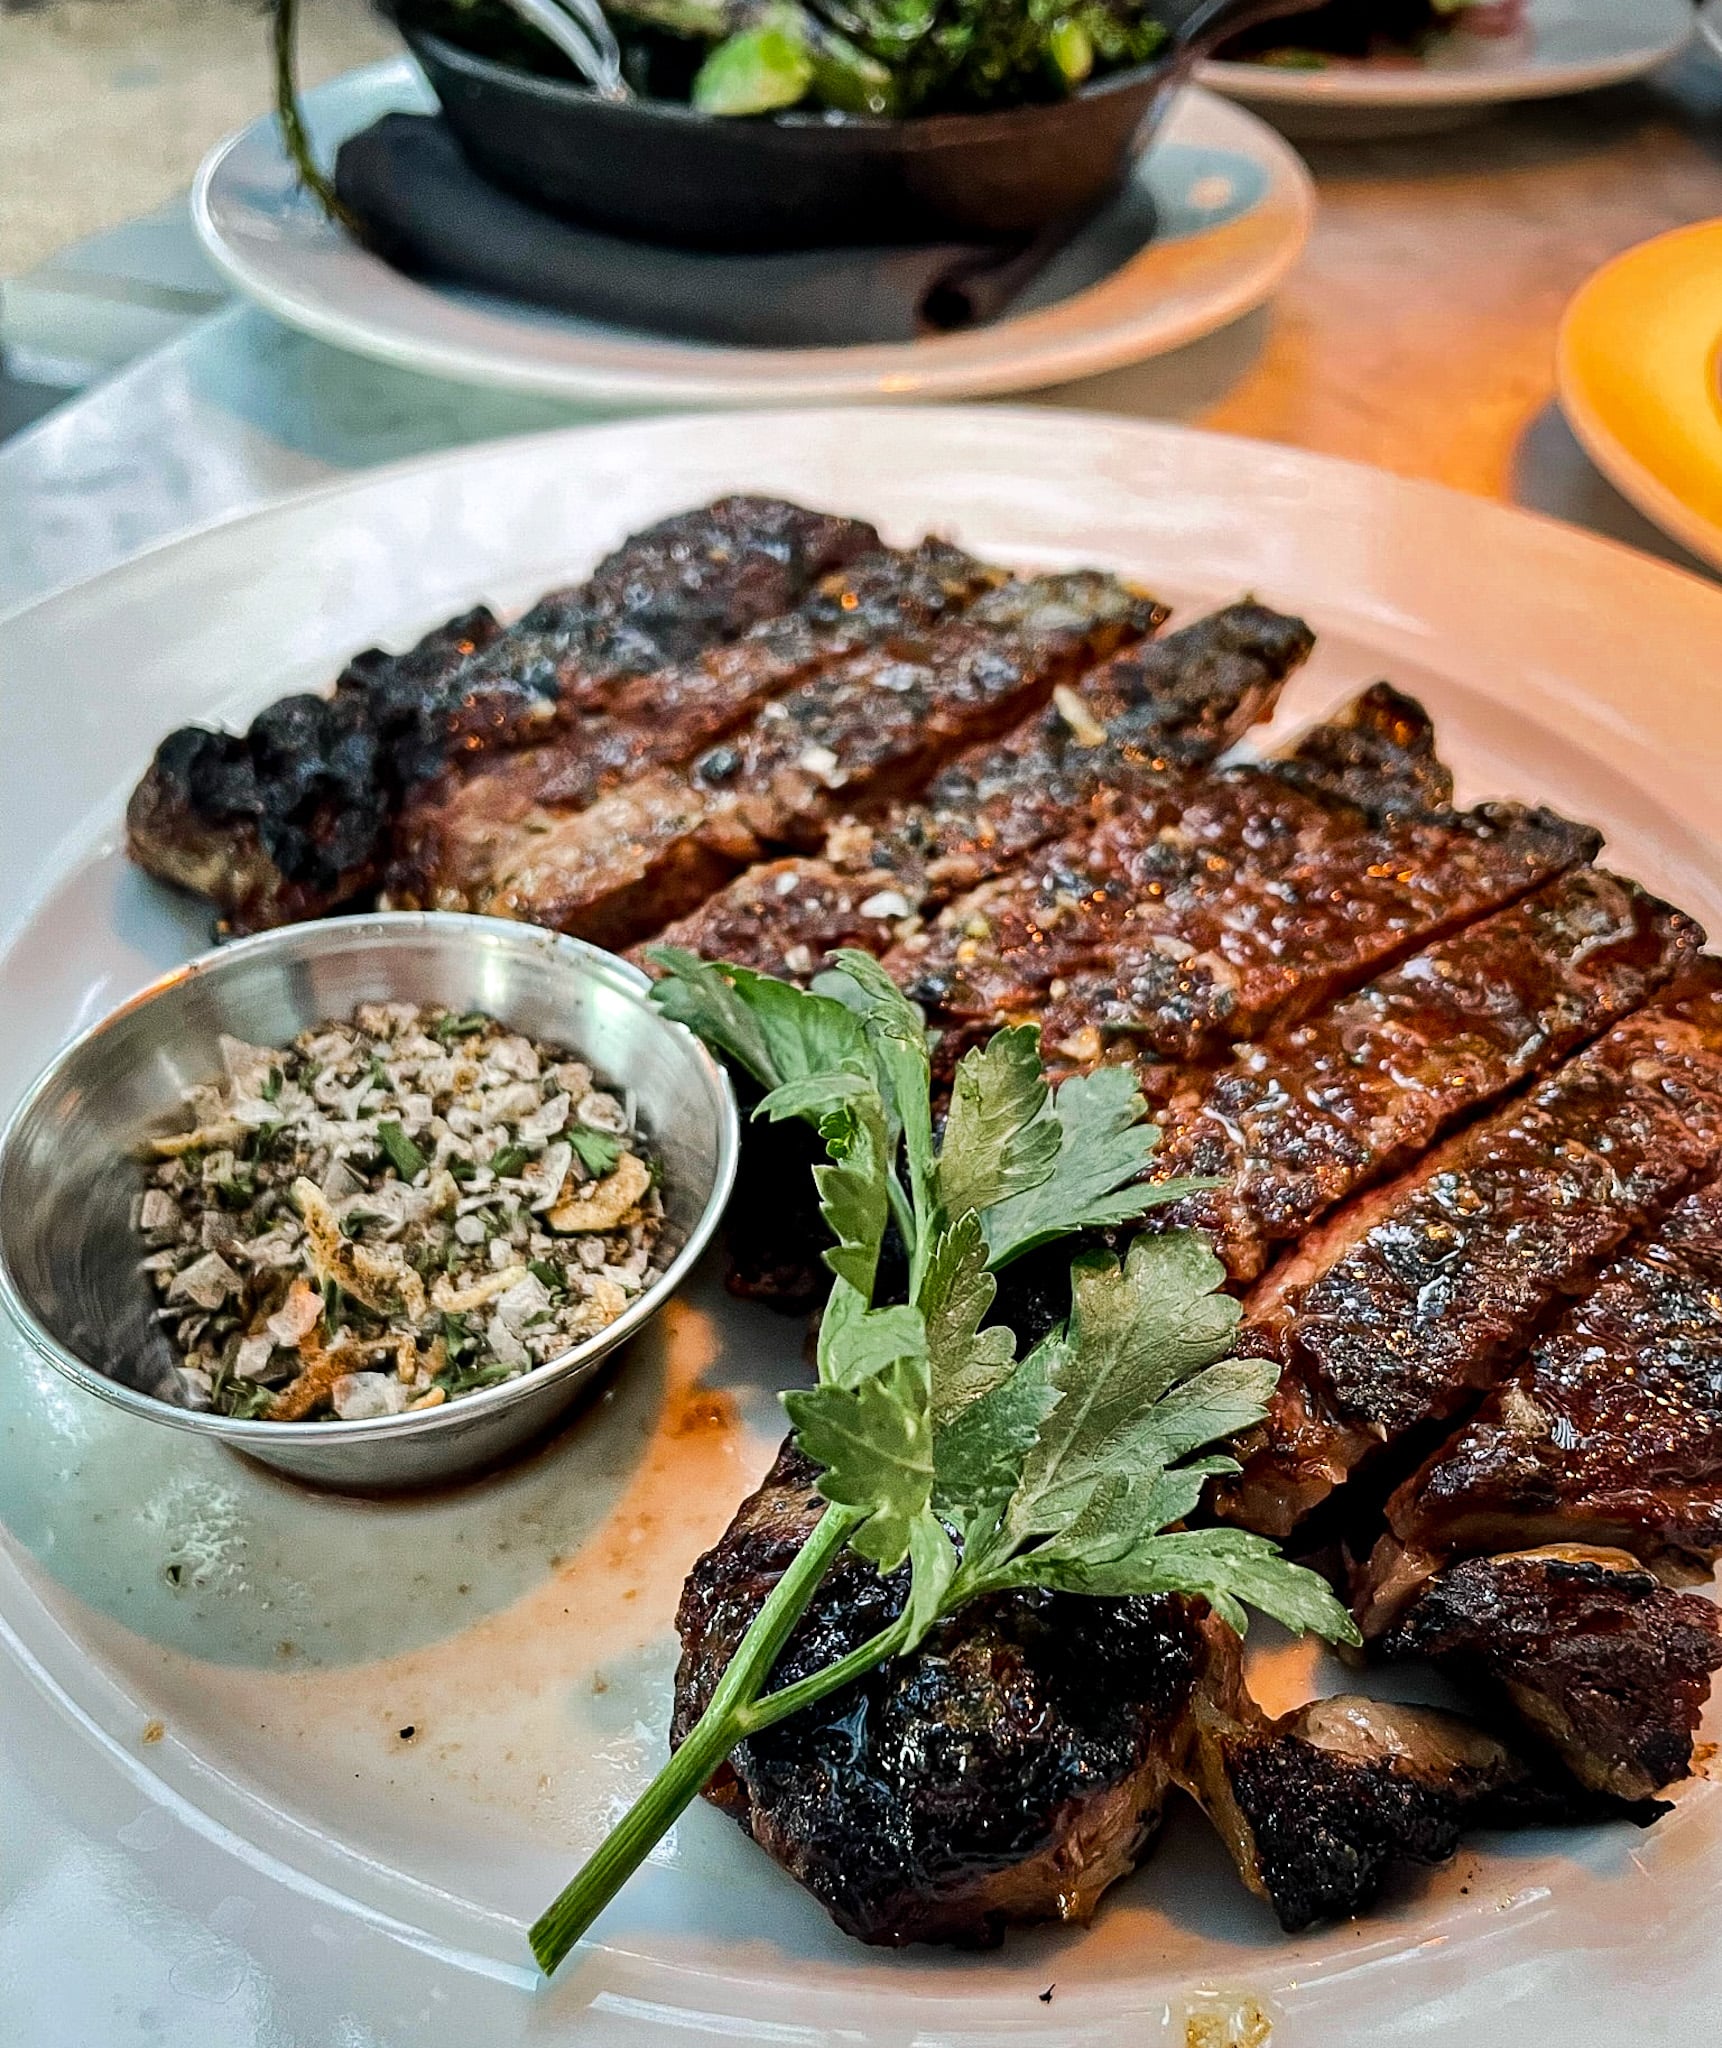 Ribeye steak from RH Restaurant